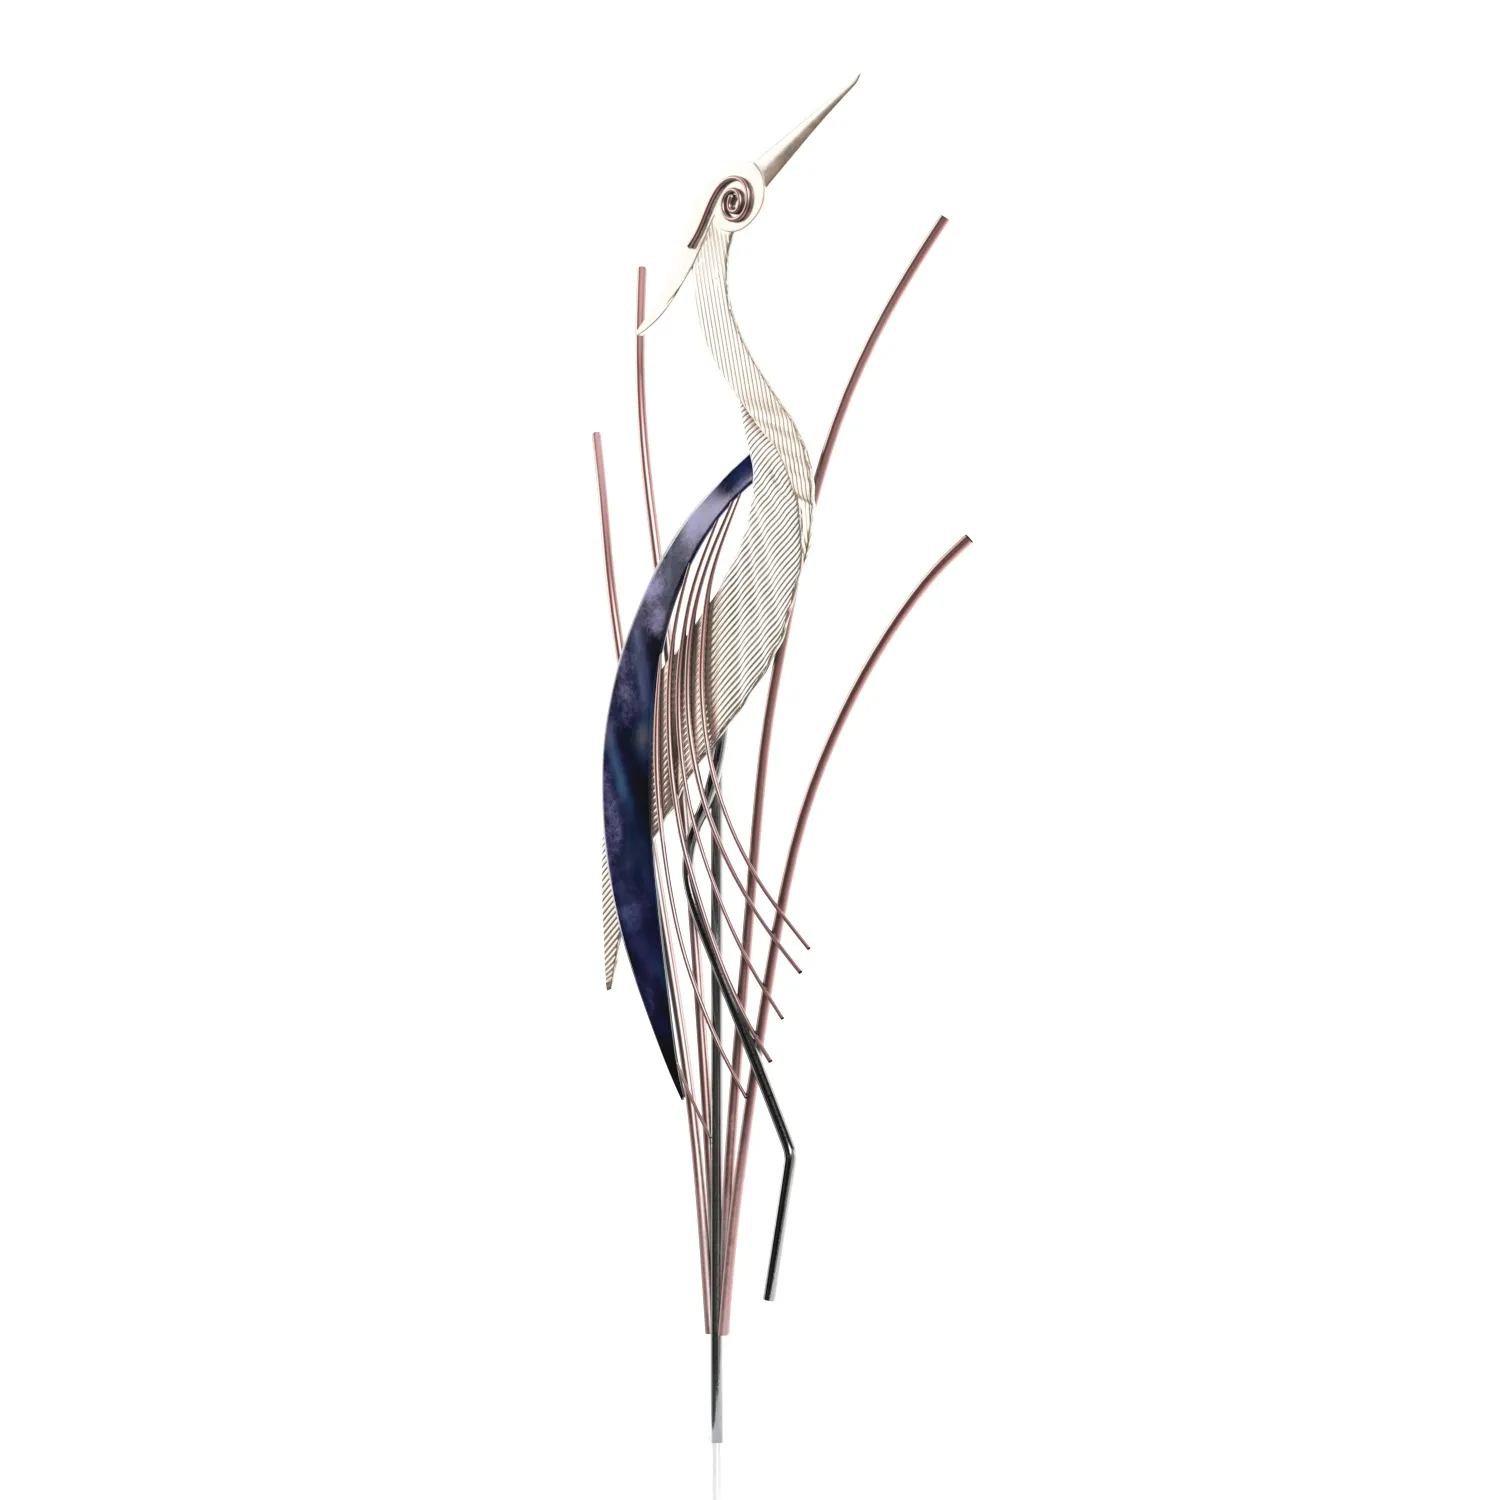 Heron Bird With Head Raised 38 Inch High Metal Wall Art PBR 3D Model_04